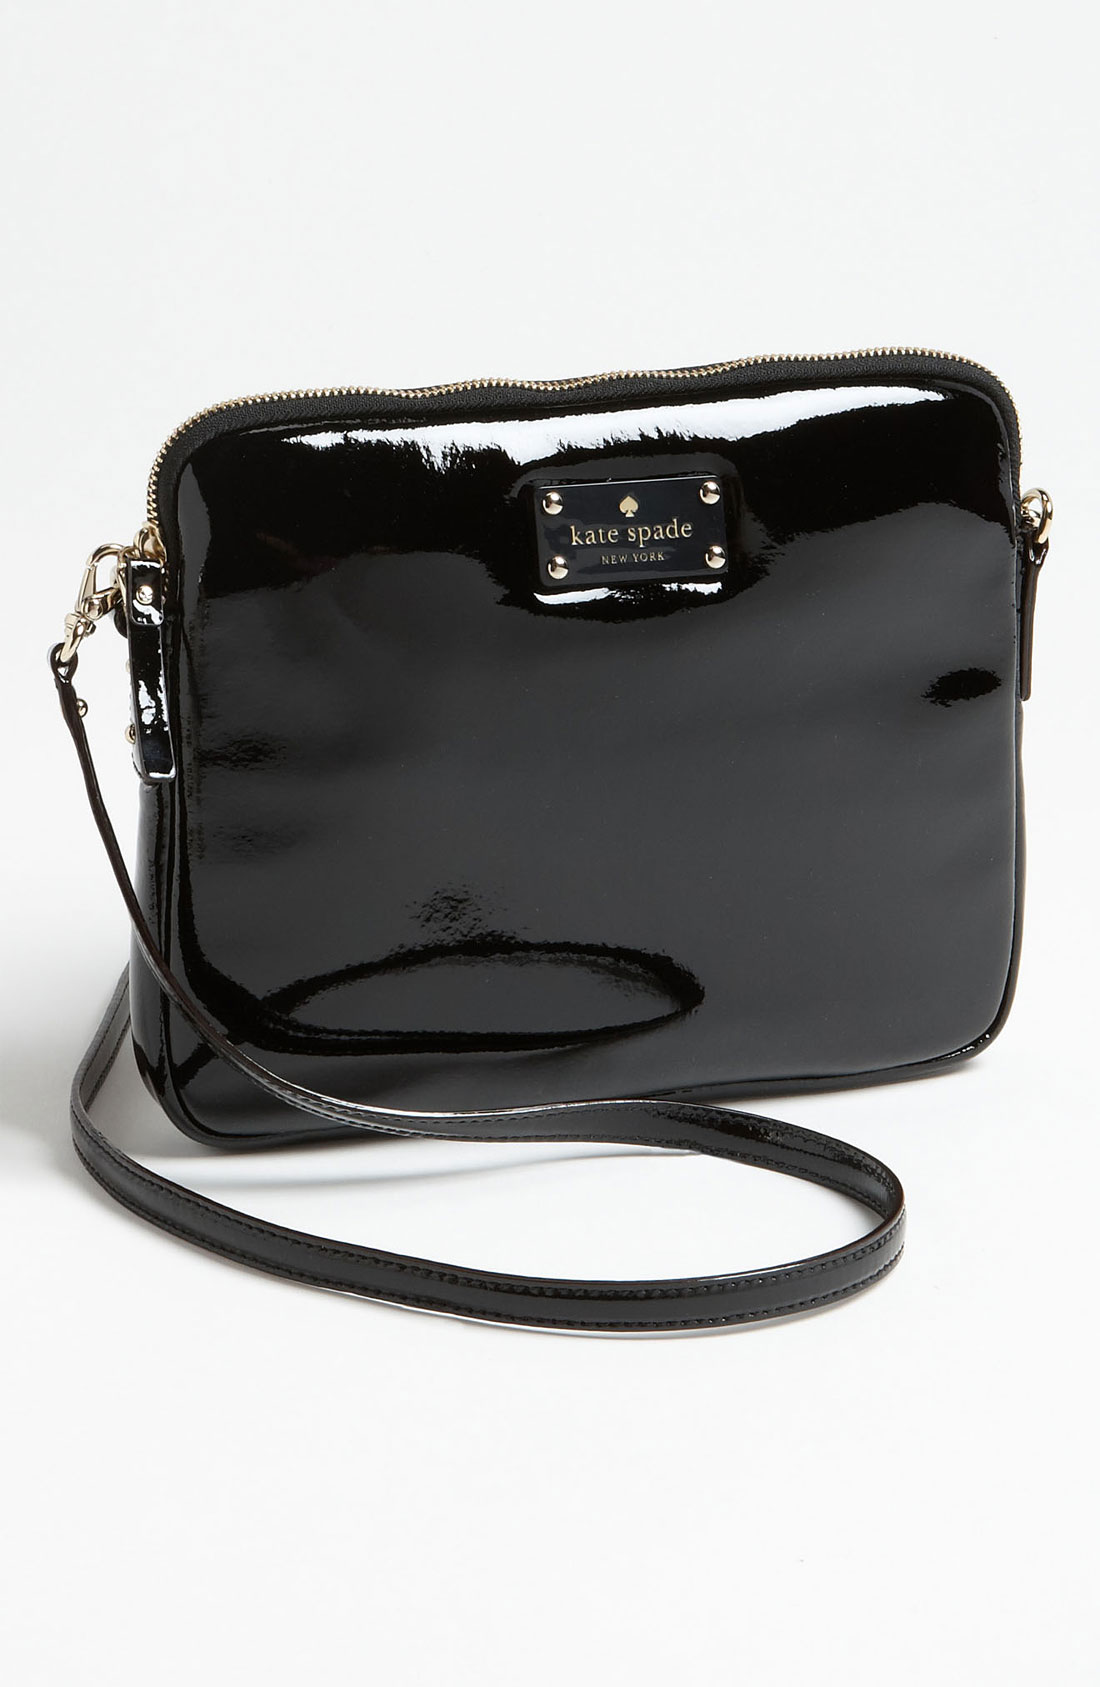 Kate Spade Bryce Flicker Patent Leather Ipad Crossbody Bag in Black (black patent) | Lyst